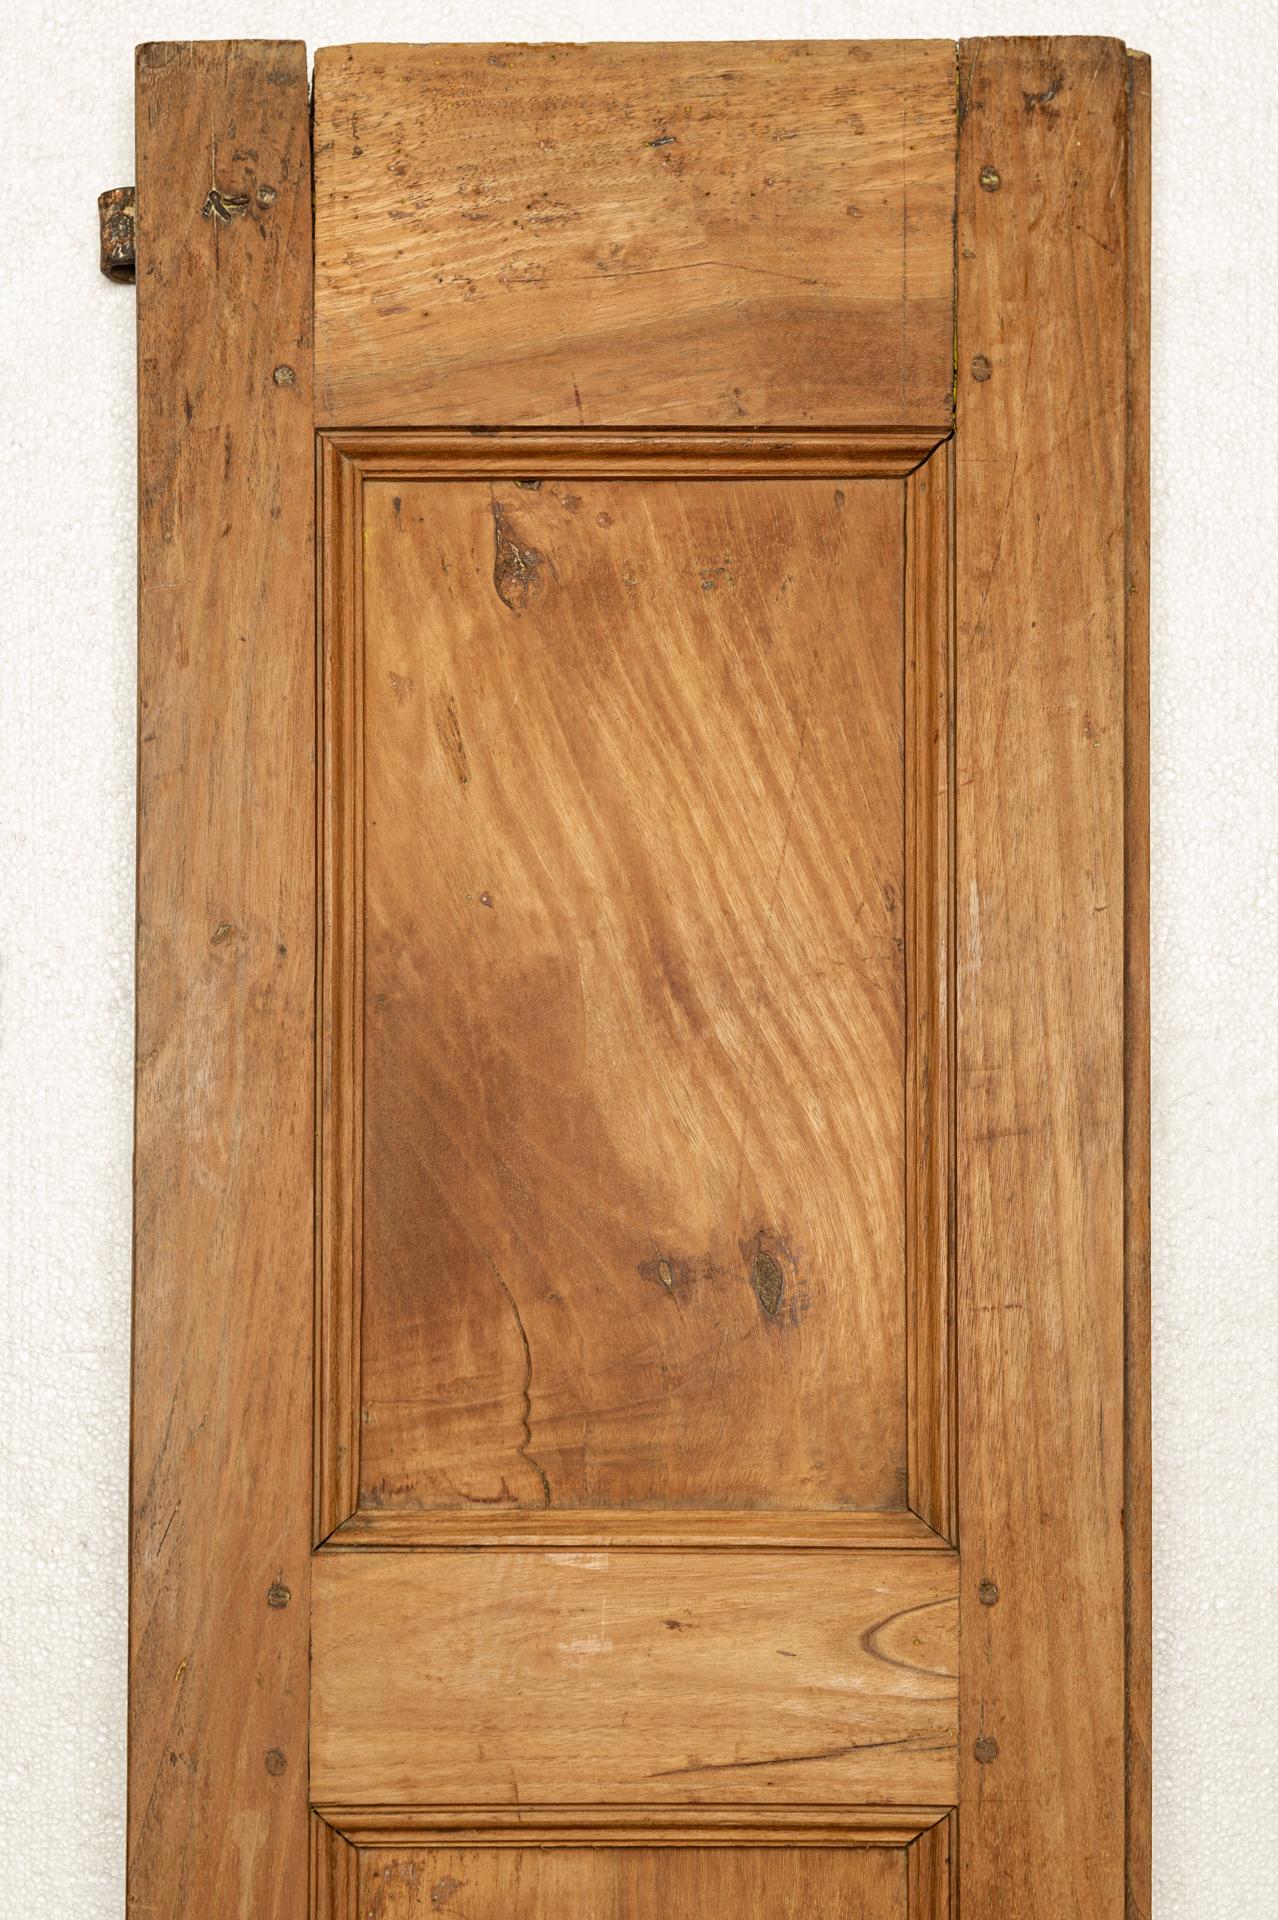 Walnut Wooden Panel with Little Ancient Italian Door For Sale